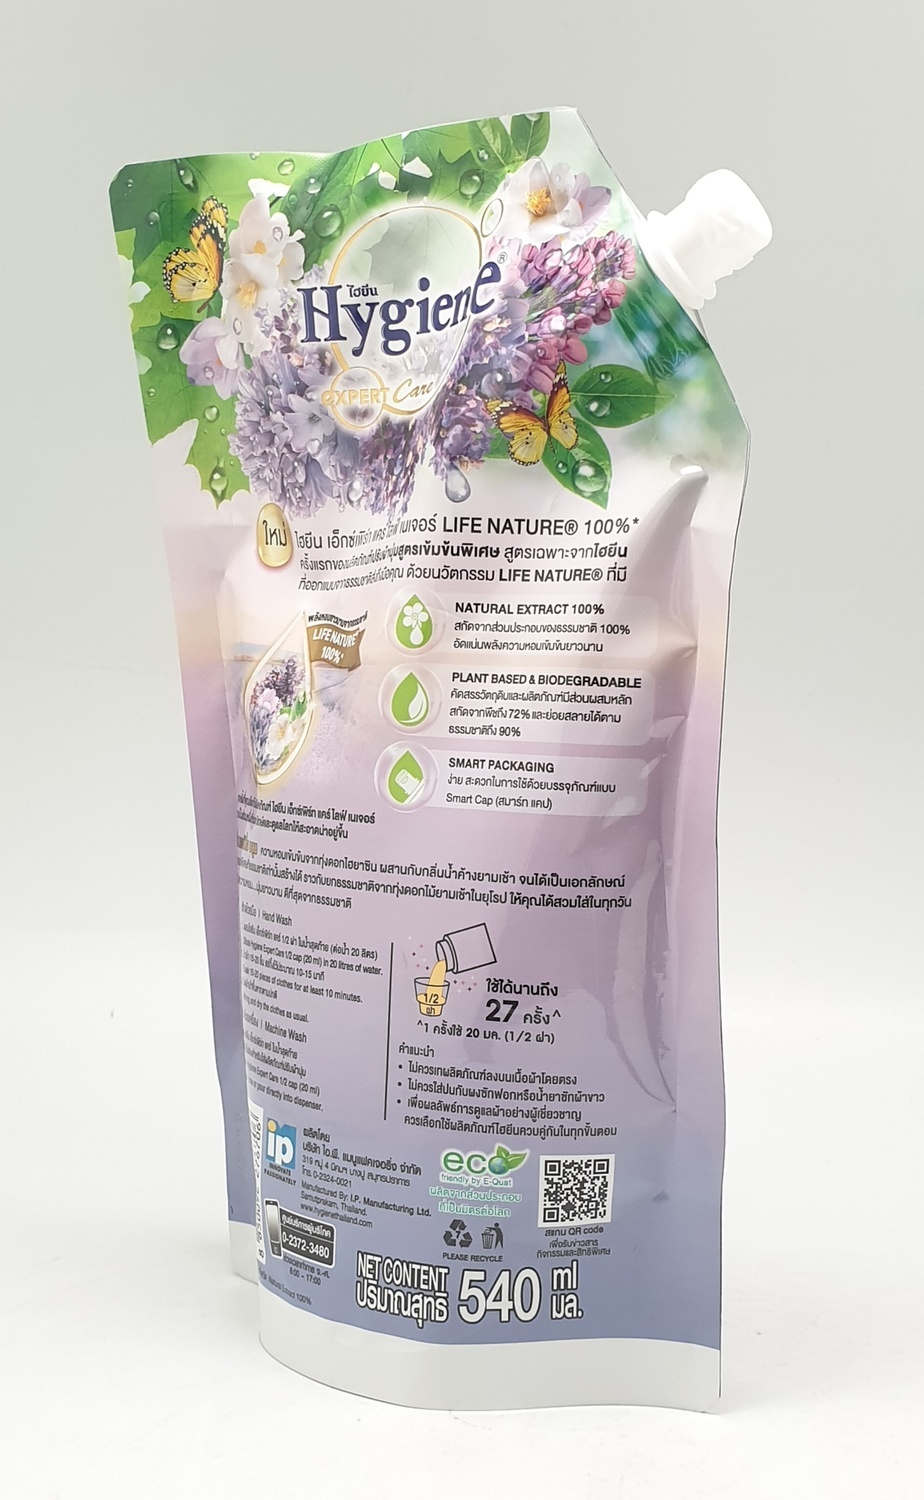 Hygiene ไฮยีนเอ็กซ์เพิร์ทแคร์ มอร์นิ่ง บลูม ม่วง 580 มล. Hygiene FS Expert Care 580 สีม่วง